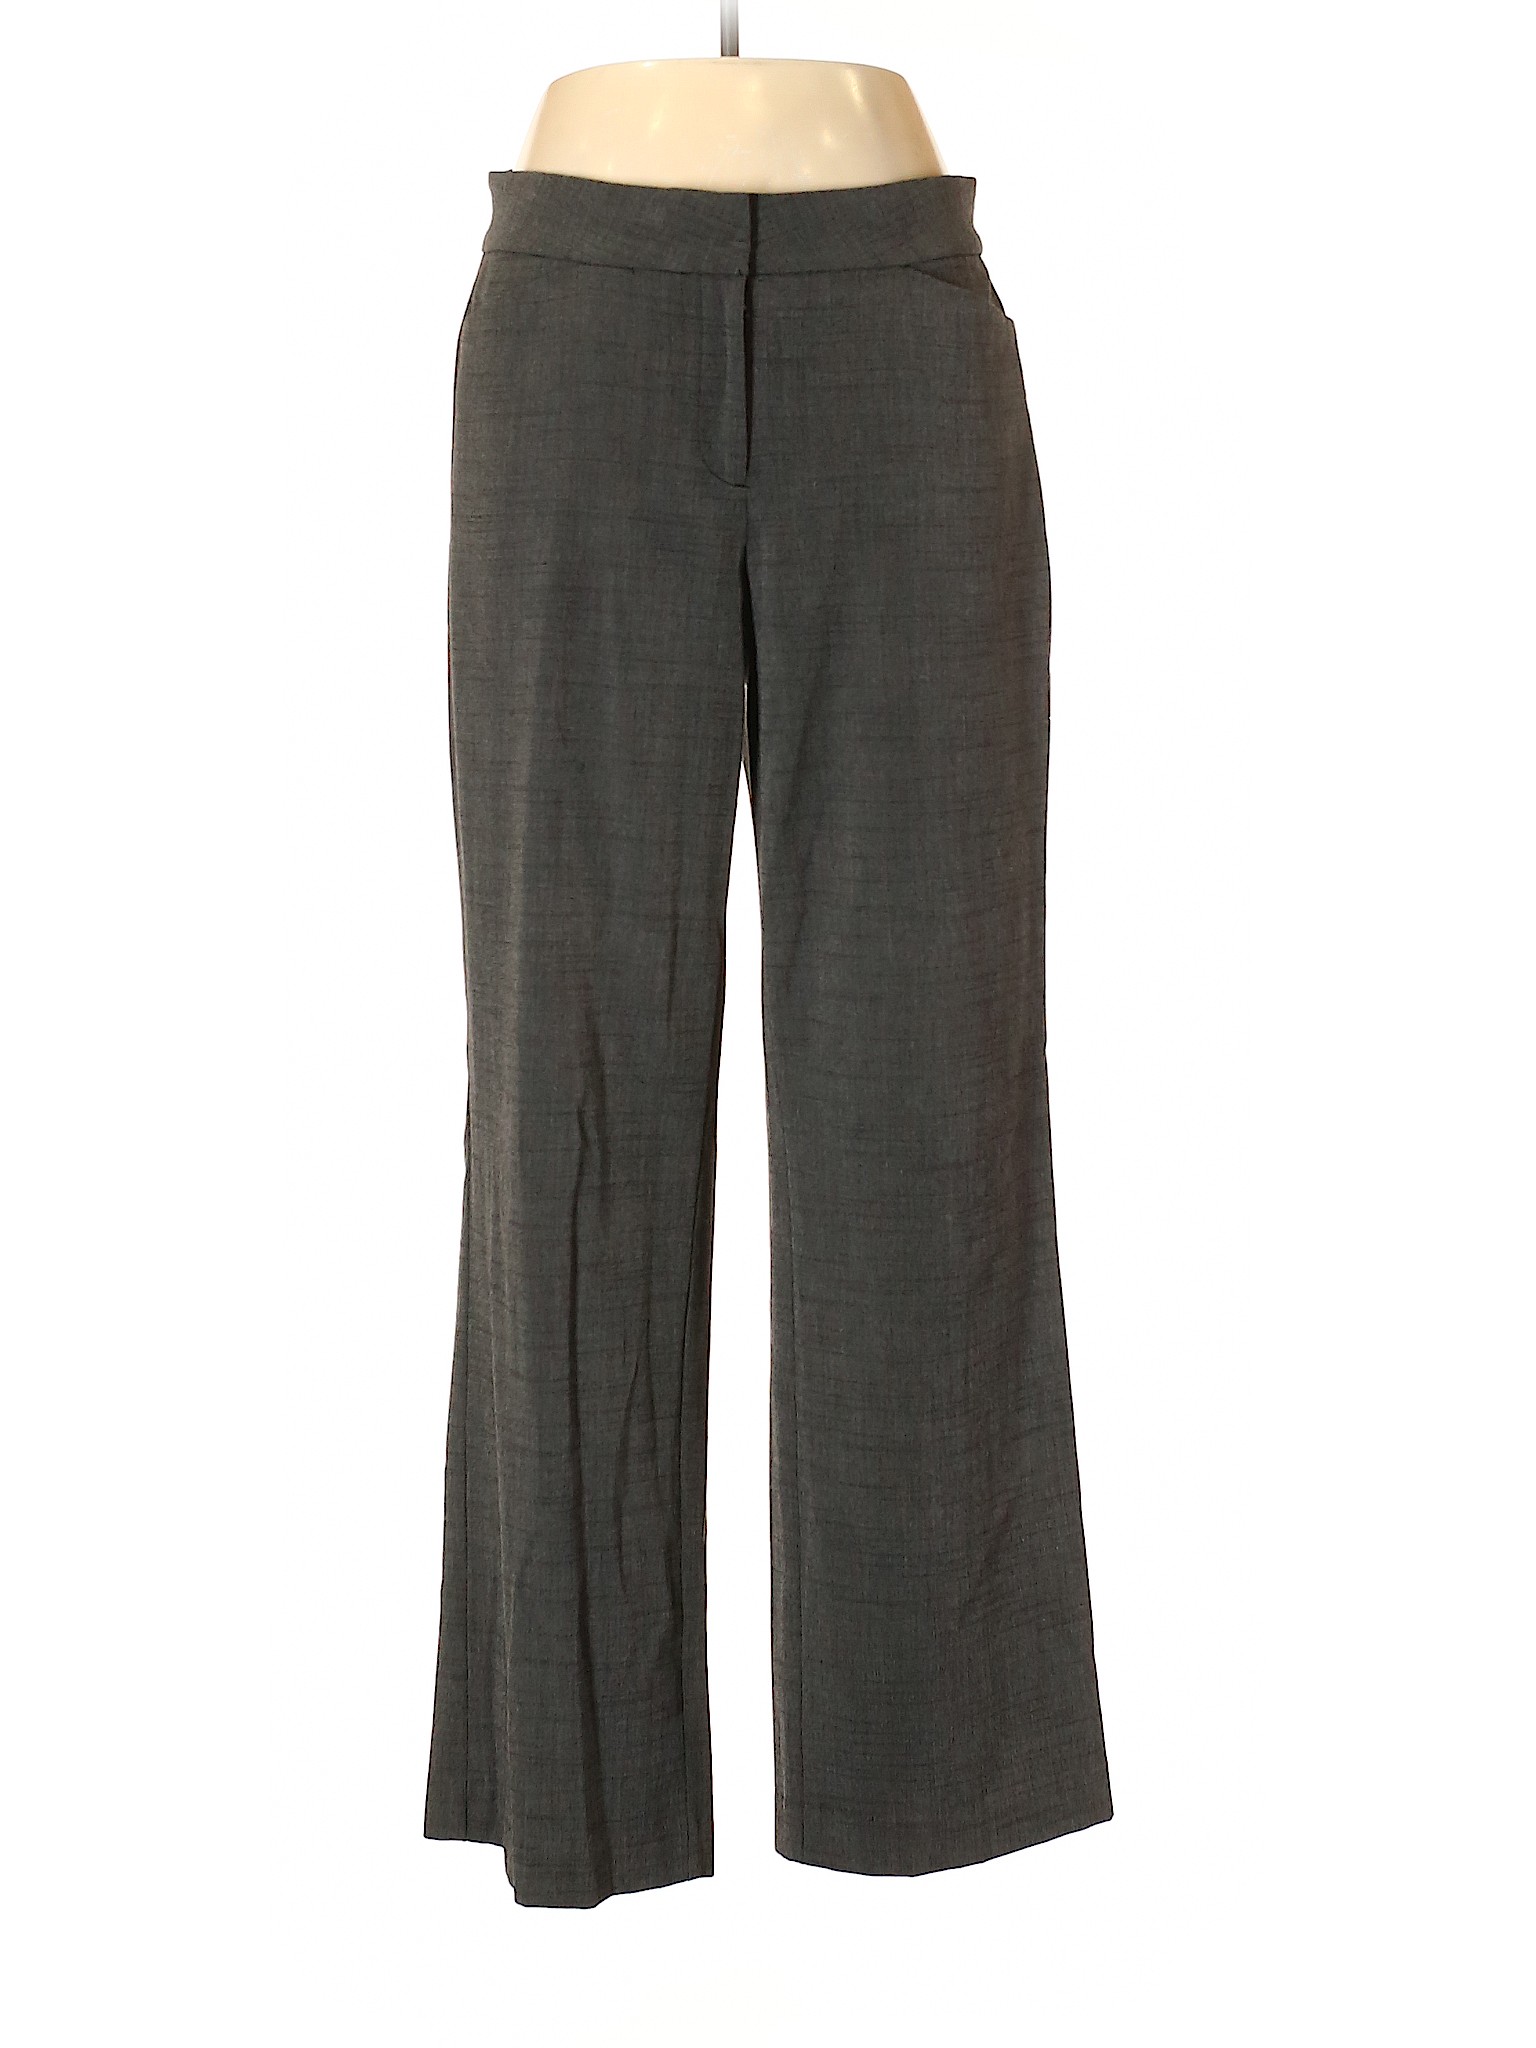 Dana Buchman Solid Gray Dress Pants Size 10 - 94% off | thredUP